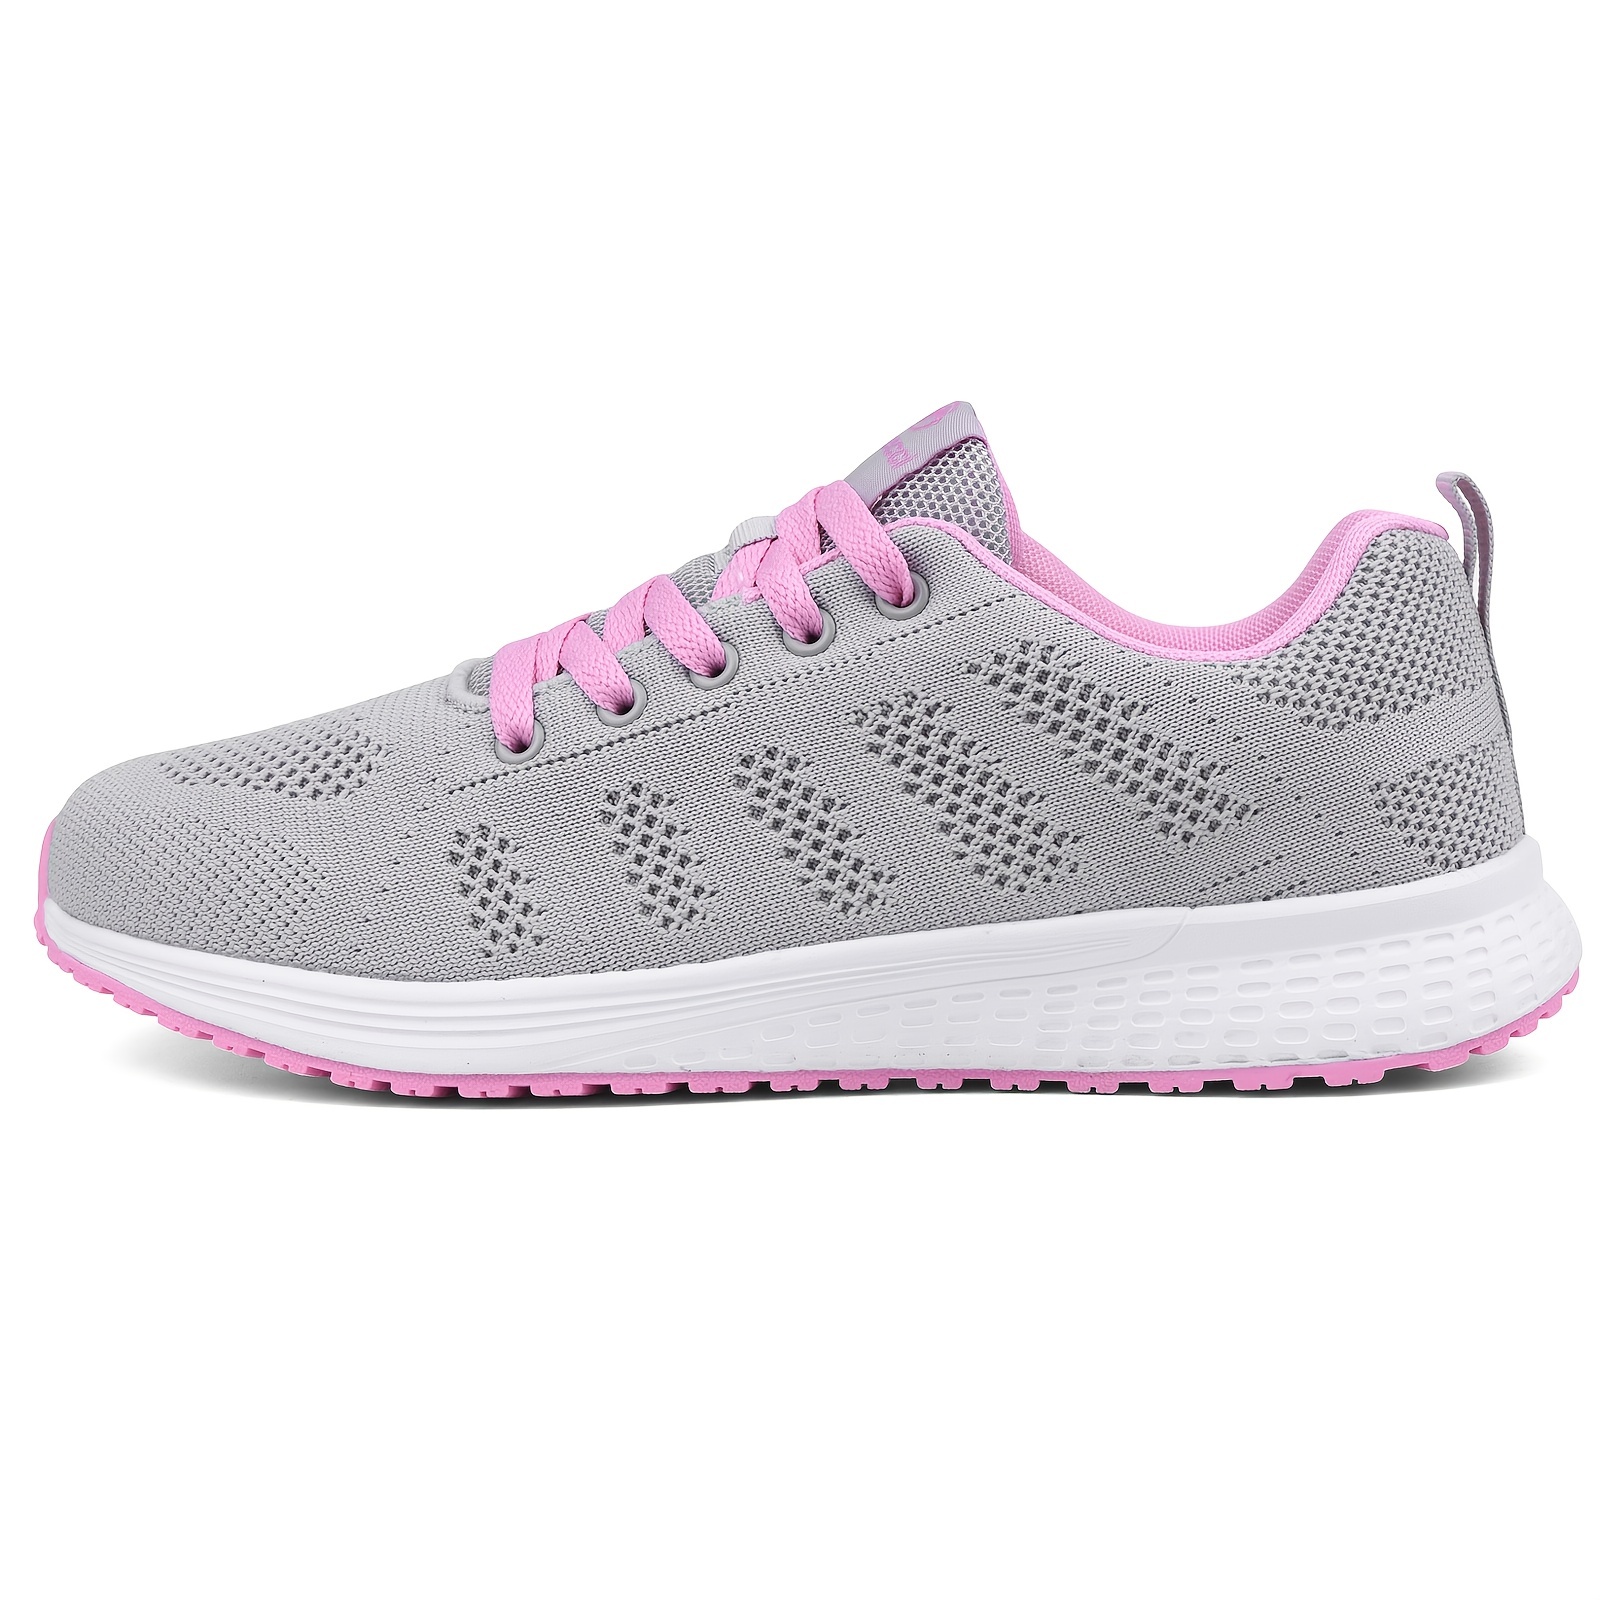 Cathalem Womens Casual Dress Shoes Size 8 Women Fly Woven Mesh Running  Shoes Tennis Walking Women Shoes Casual Comfort Pink 8